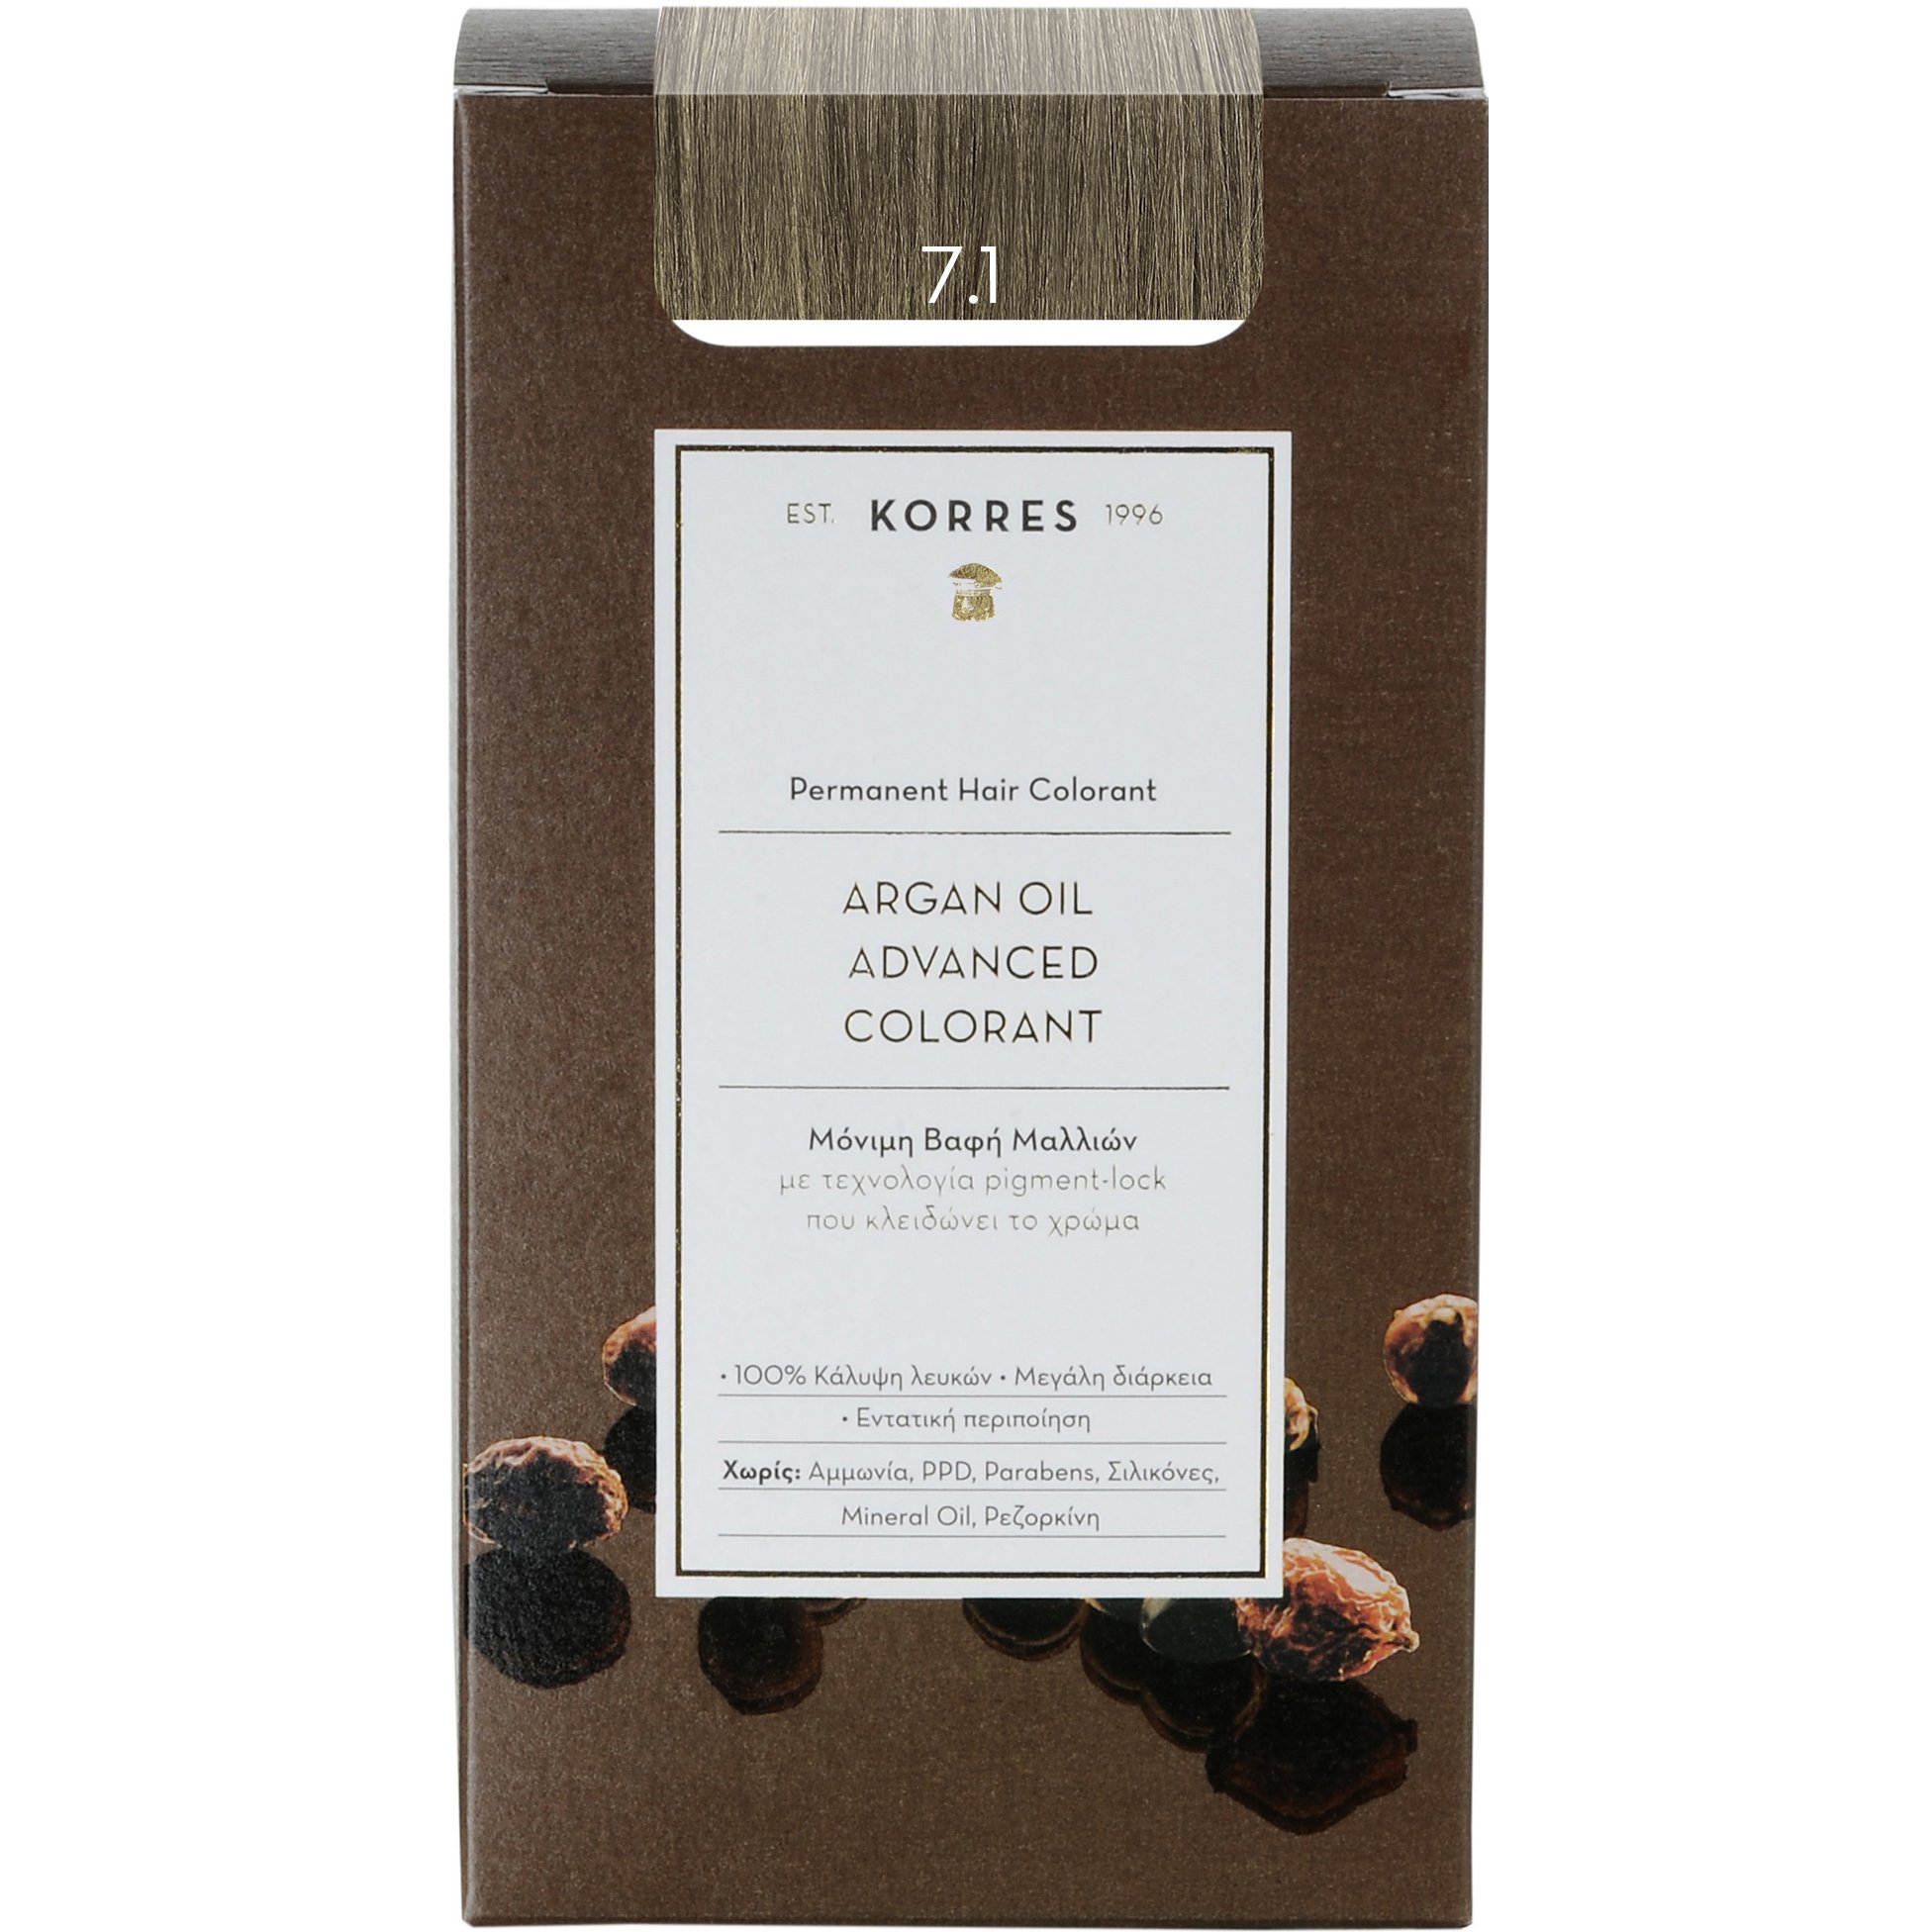 Korres Argan Oil Advanced Colorant Μόνιμη Βαφή Μαλλιών με Τεχνολογία Pigment-Lock που Κλειδώνει το Χρώμα 50ml – 7.1 Ξανθό Σαντρέ